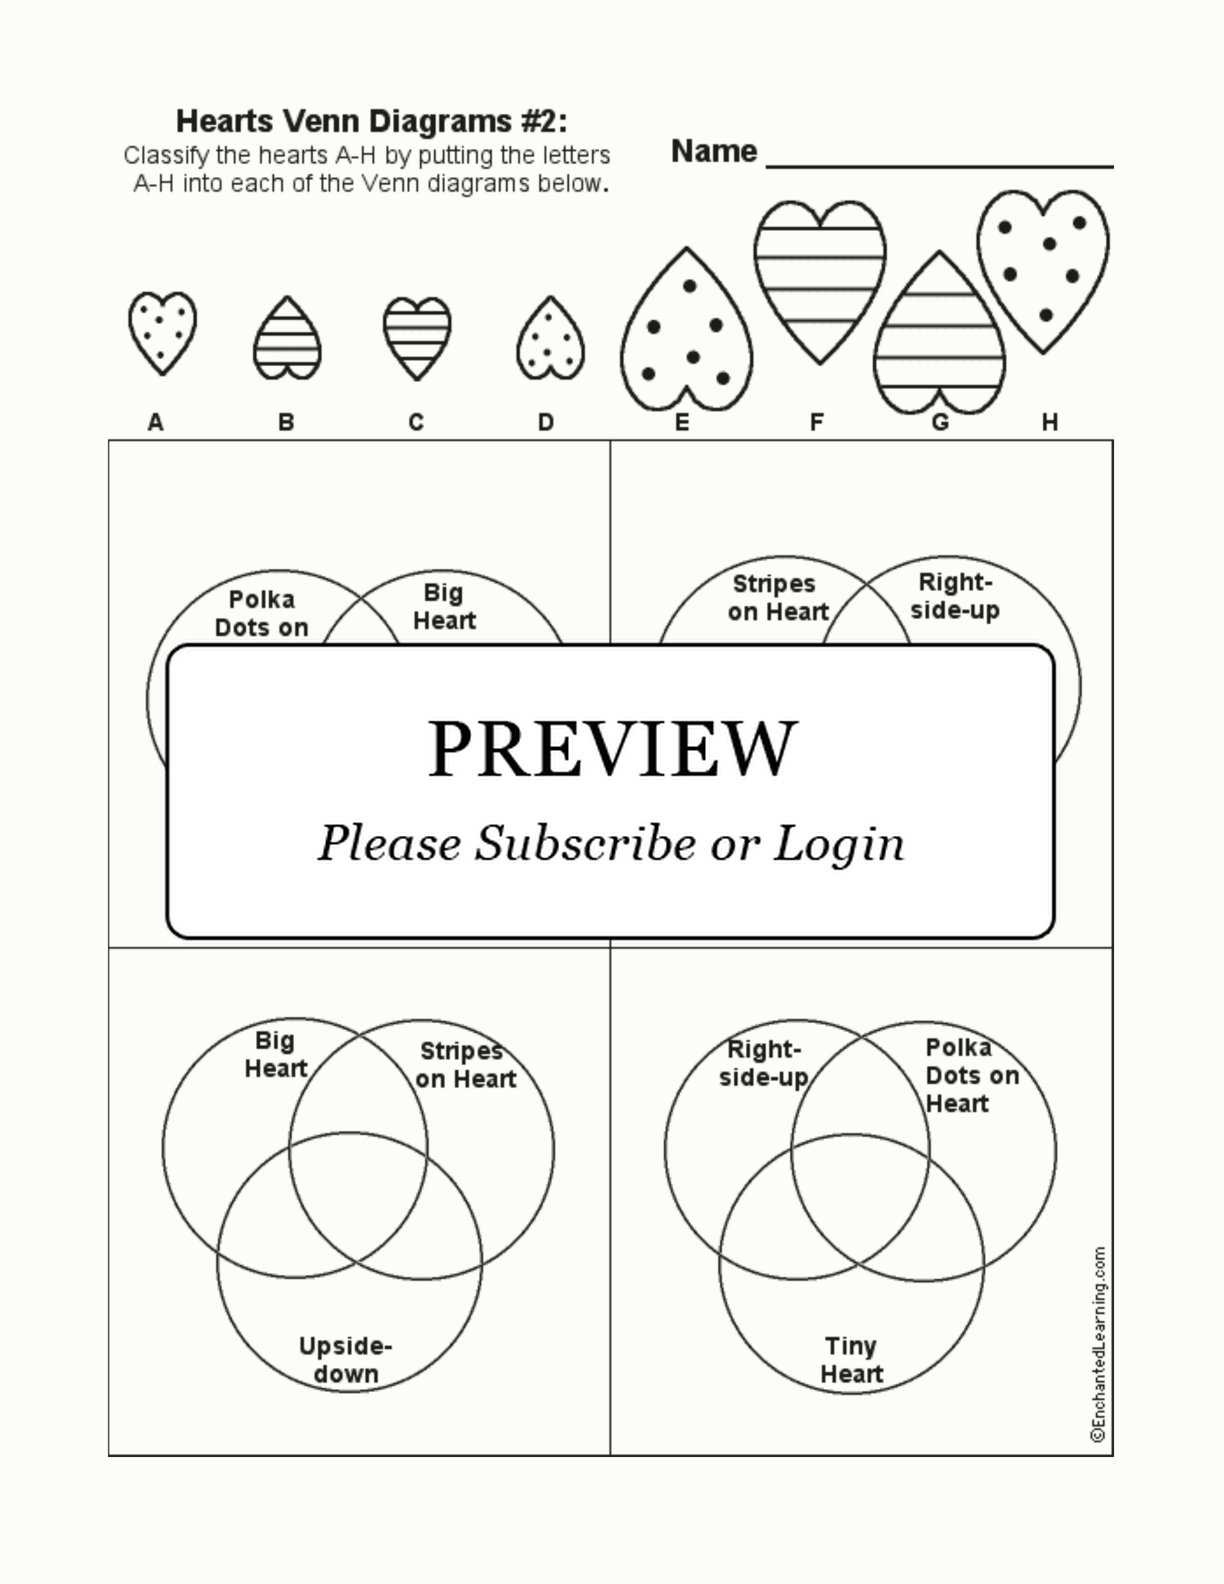 Hearts Venn Diagram #2 interactive worksheet page 1